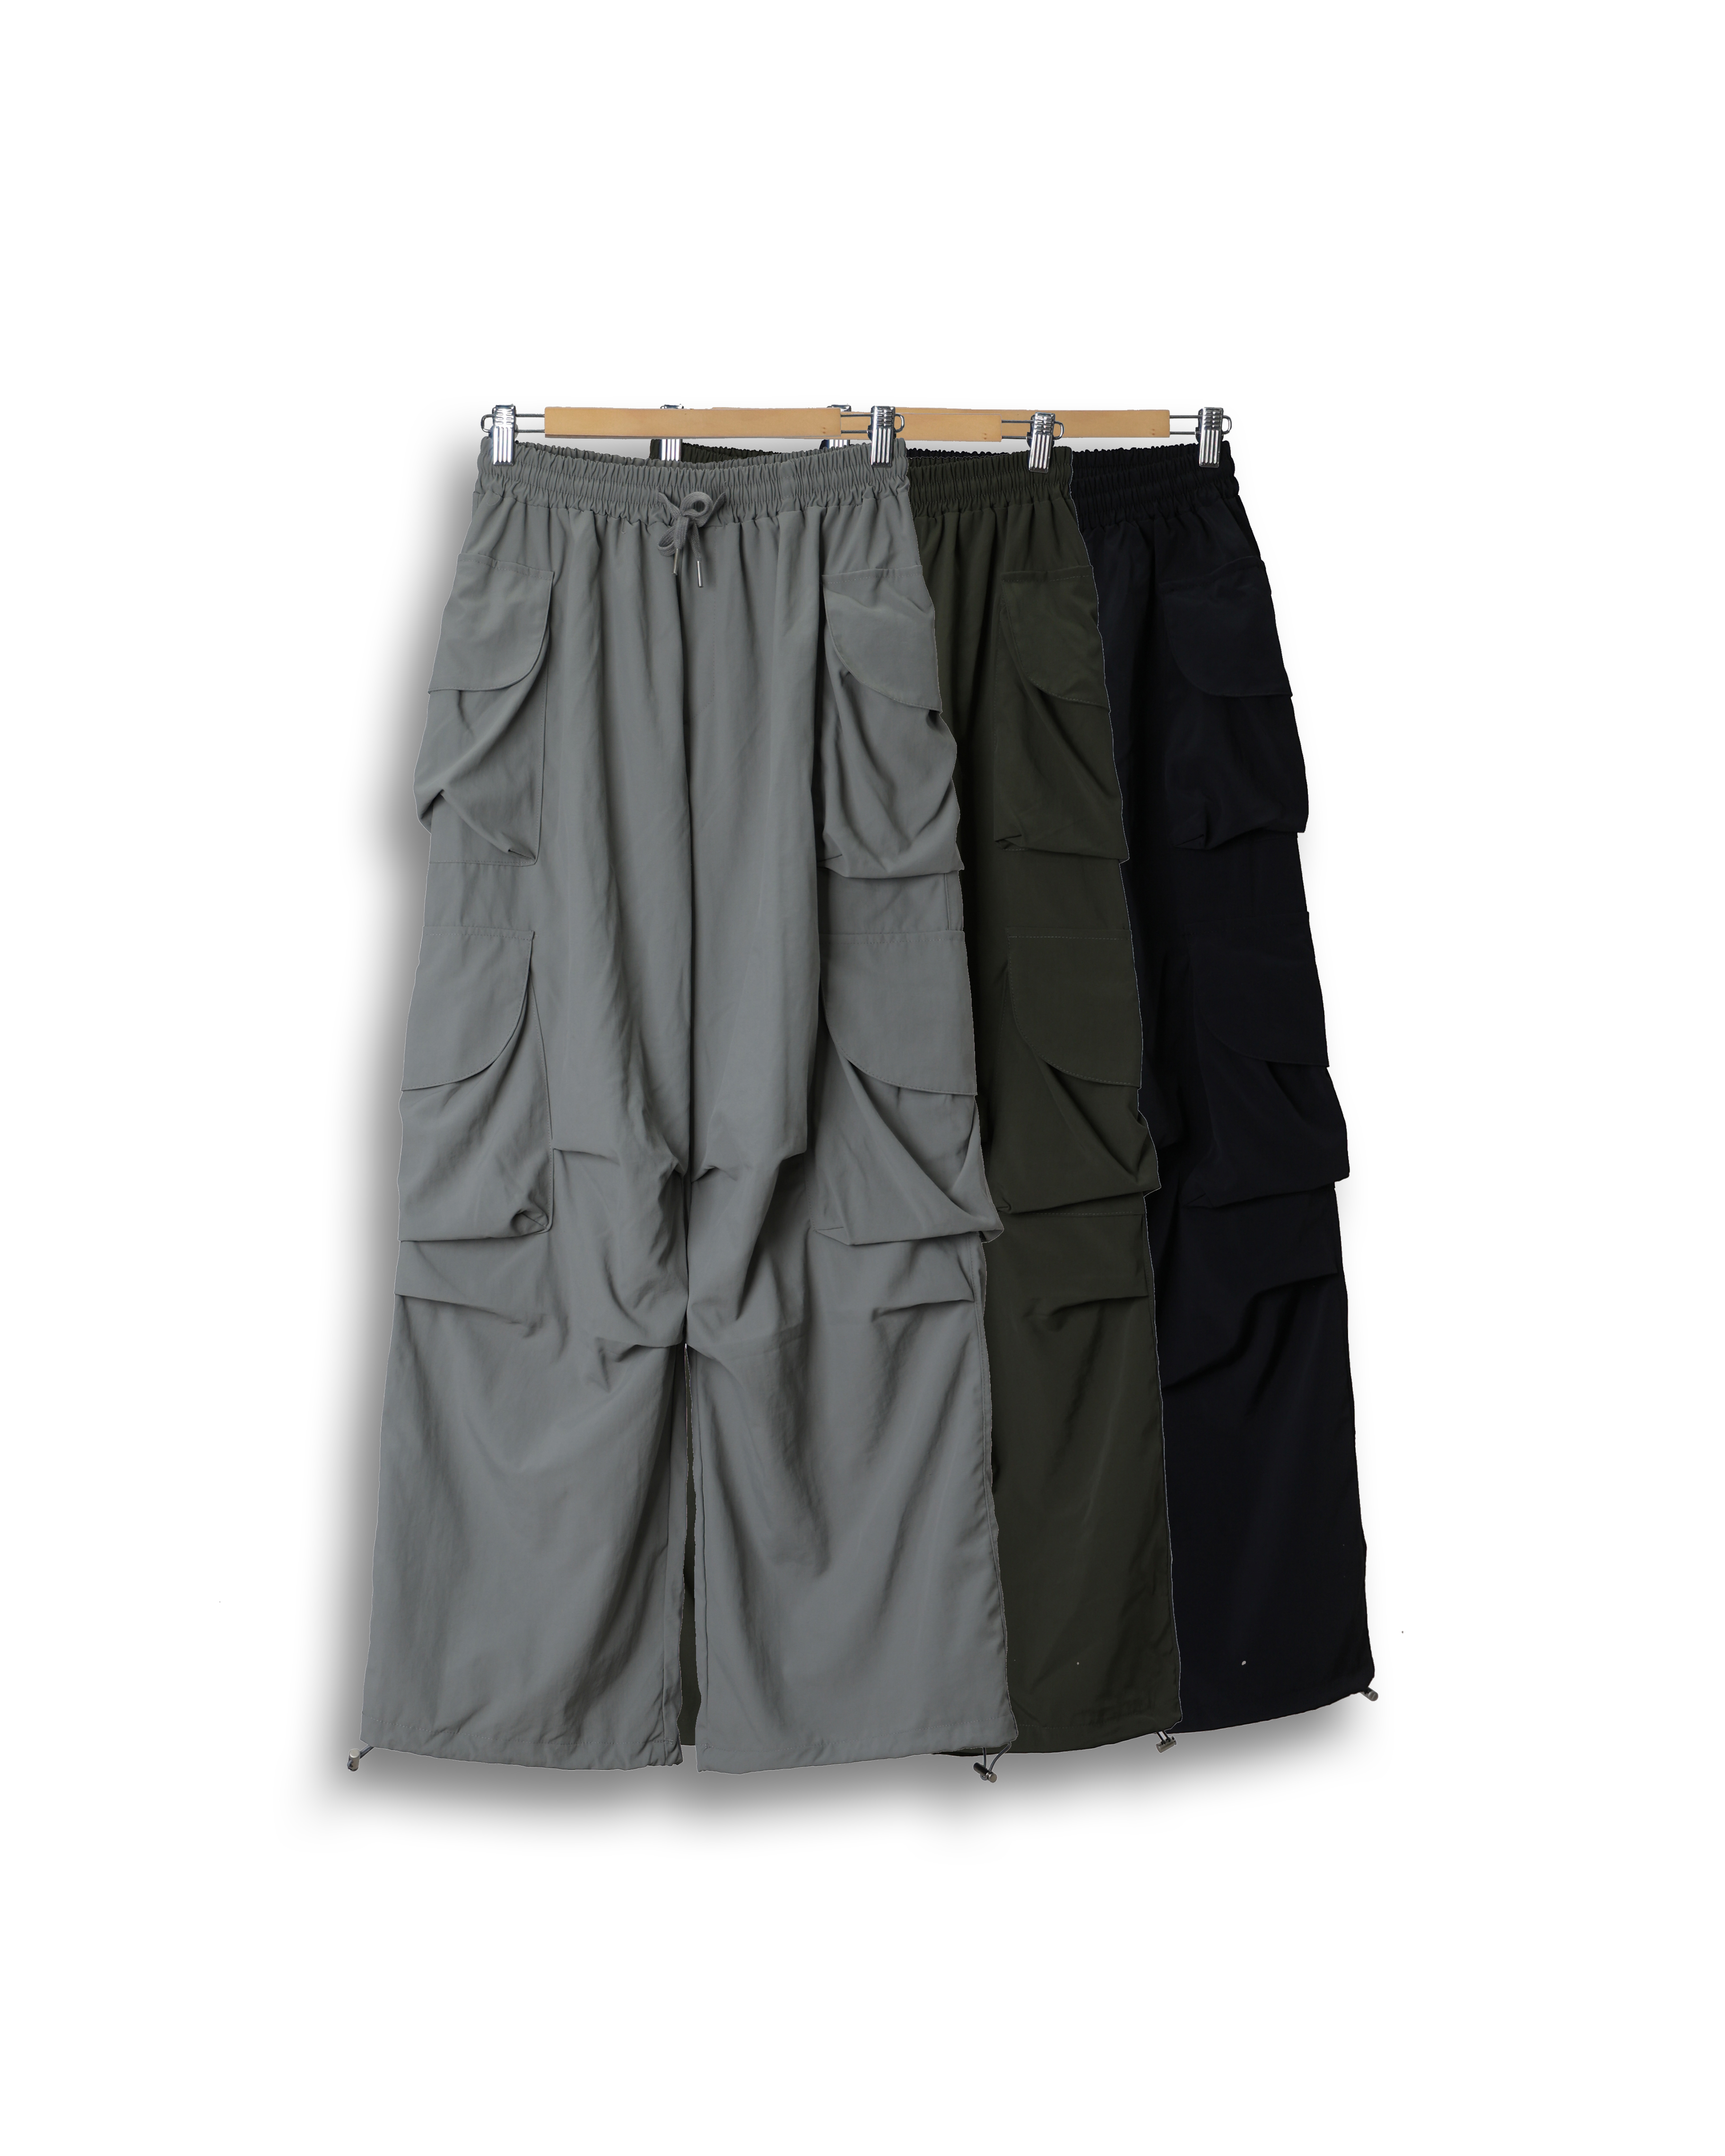 CRECEN Heavy Nylon Parachute Pants (Black/Olive/Light Gray)